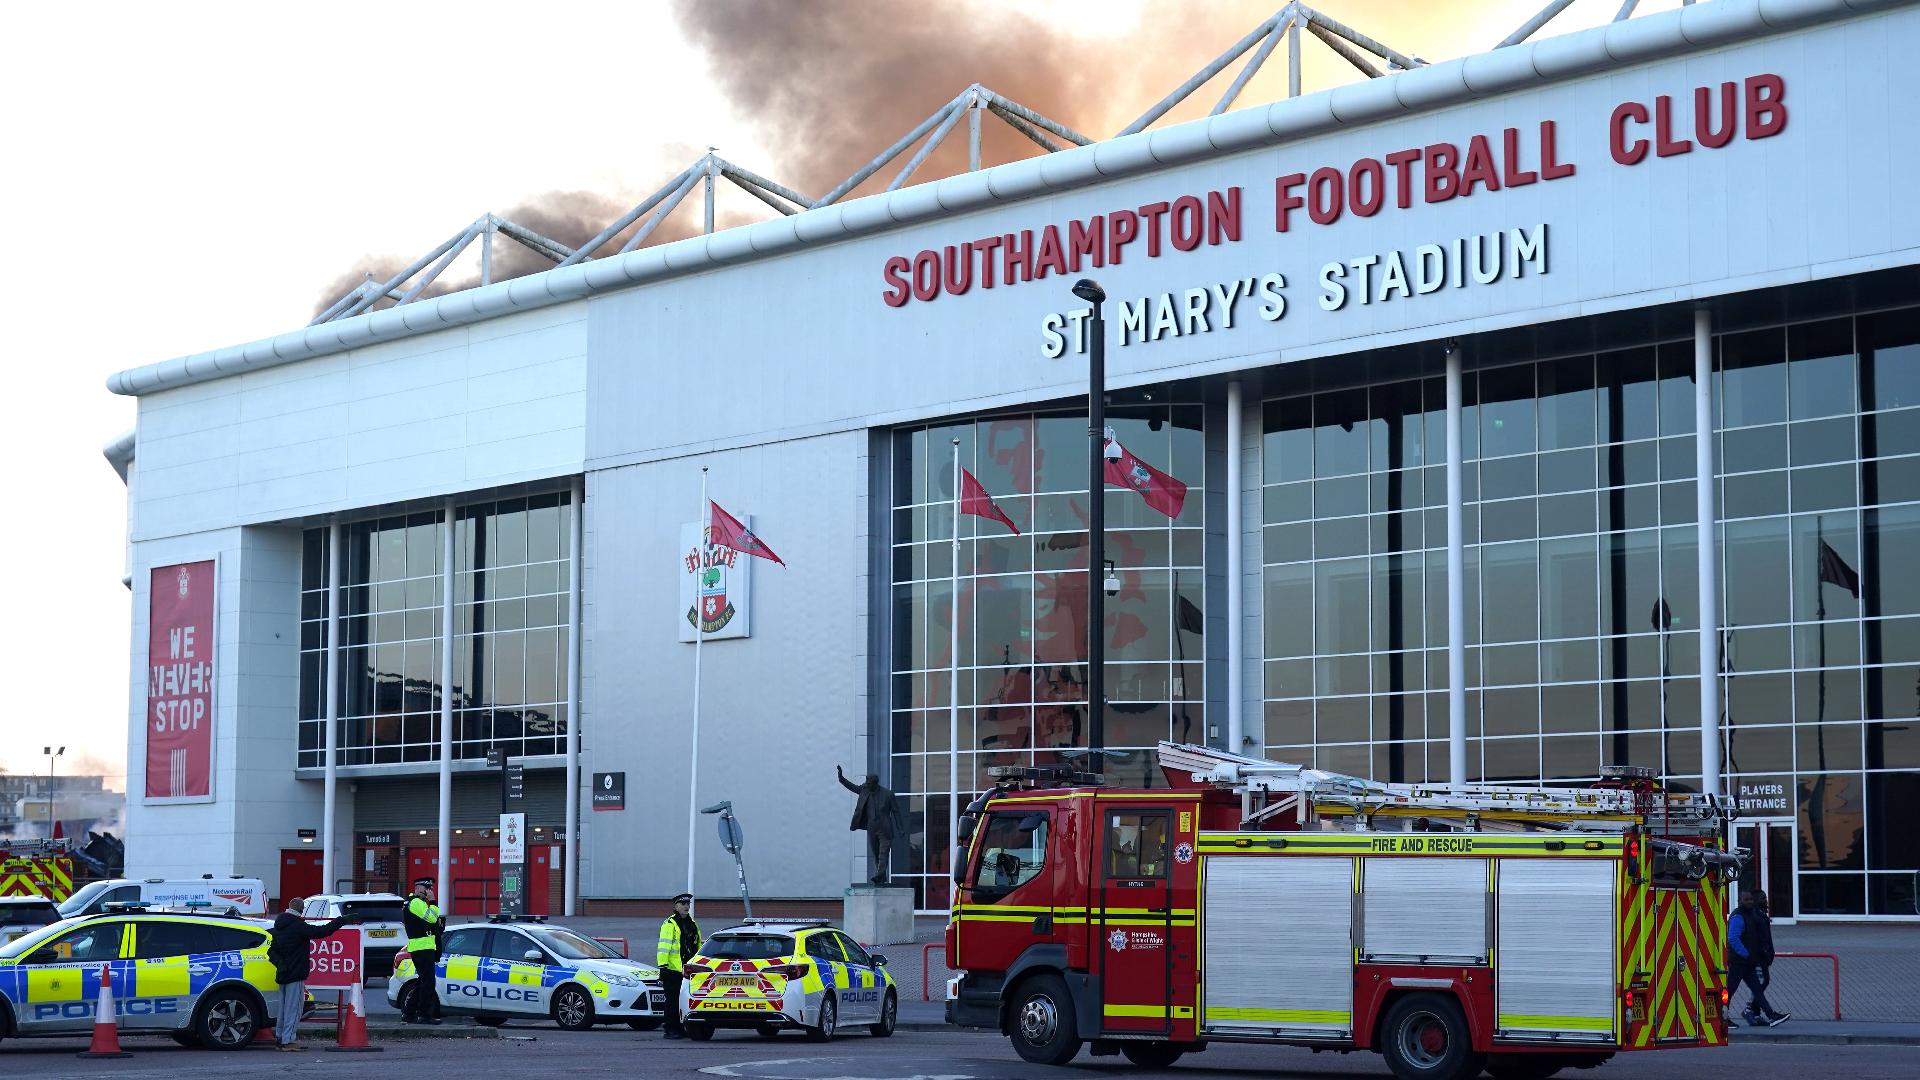 Southampton-Preston postponed after huge fire near St Mary’s Stadium